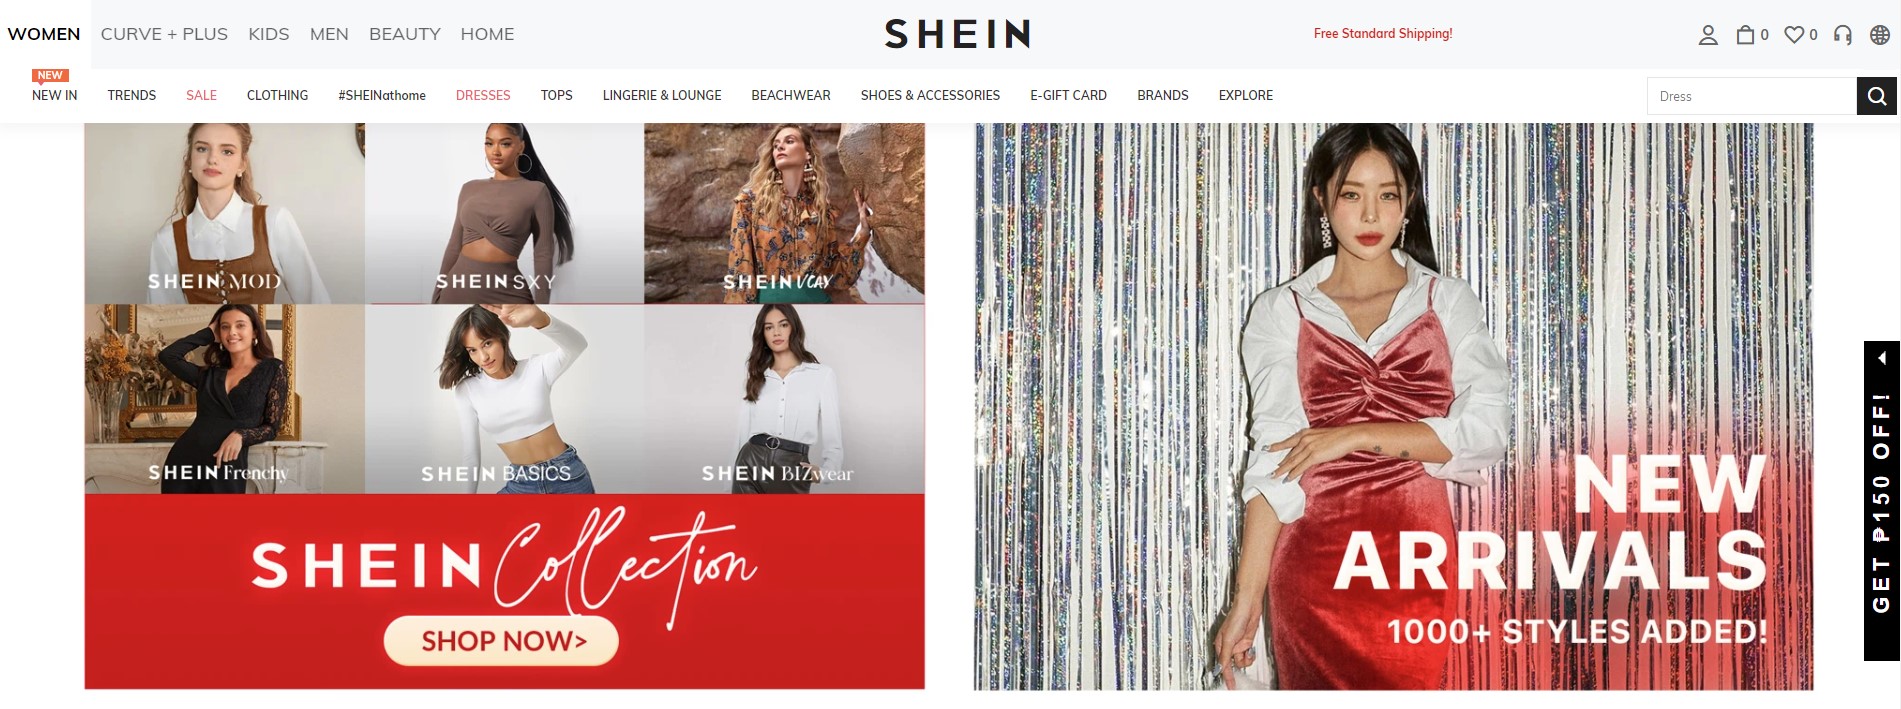 online clothing shop - Shein